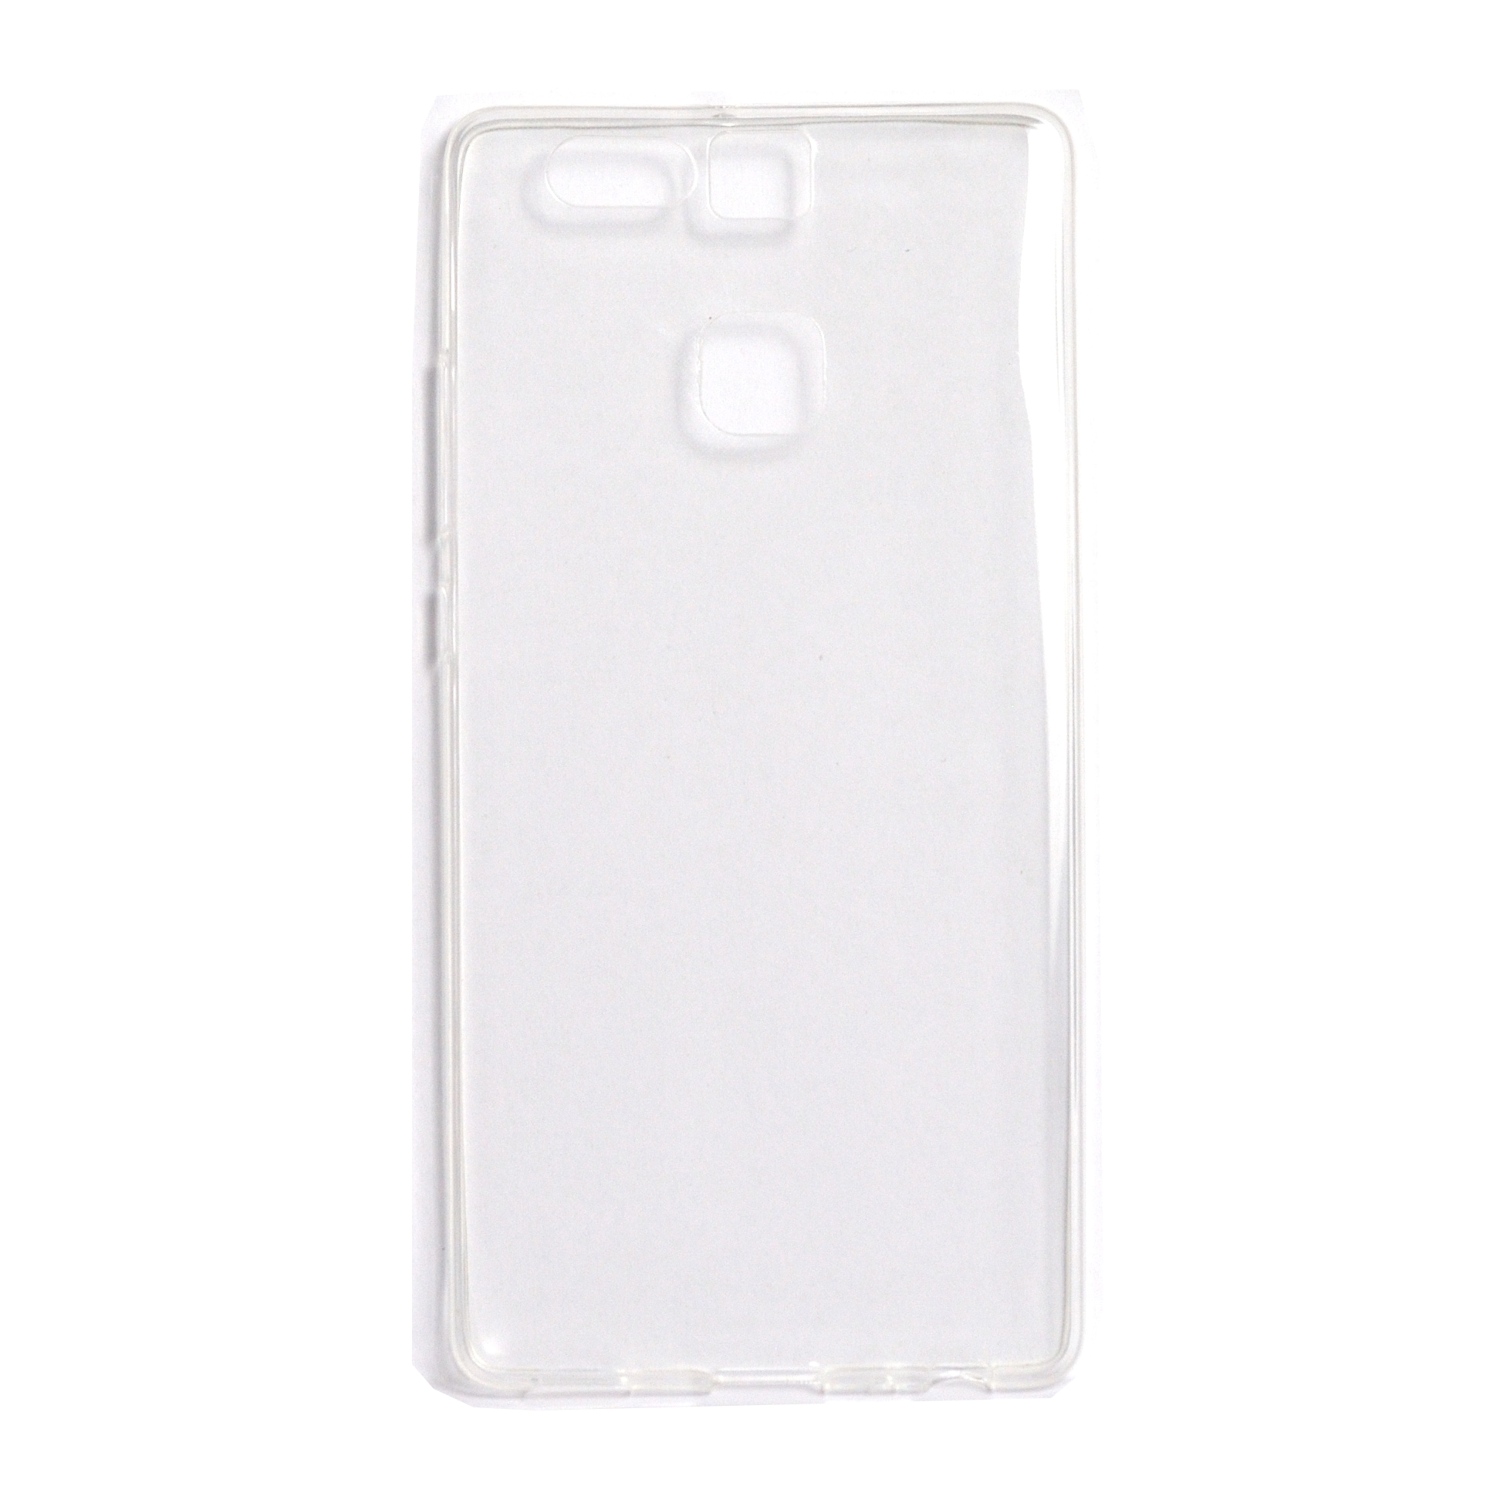 Husa Huawei telefon P9, transparent, tip back cover, material flexibil TPU, ultra subtire, „SPT-UT-HW.P9”